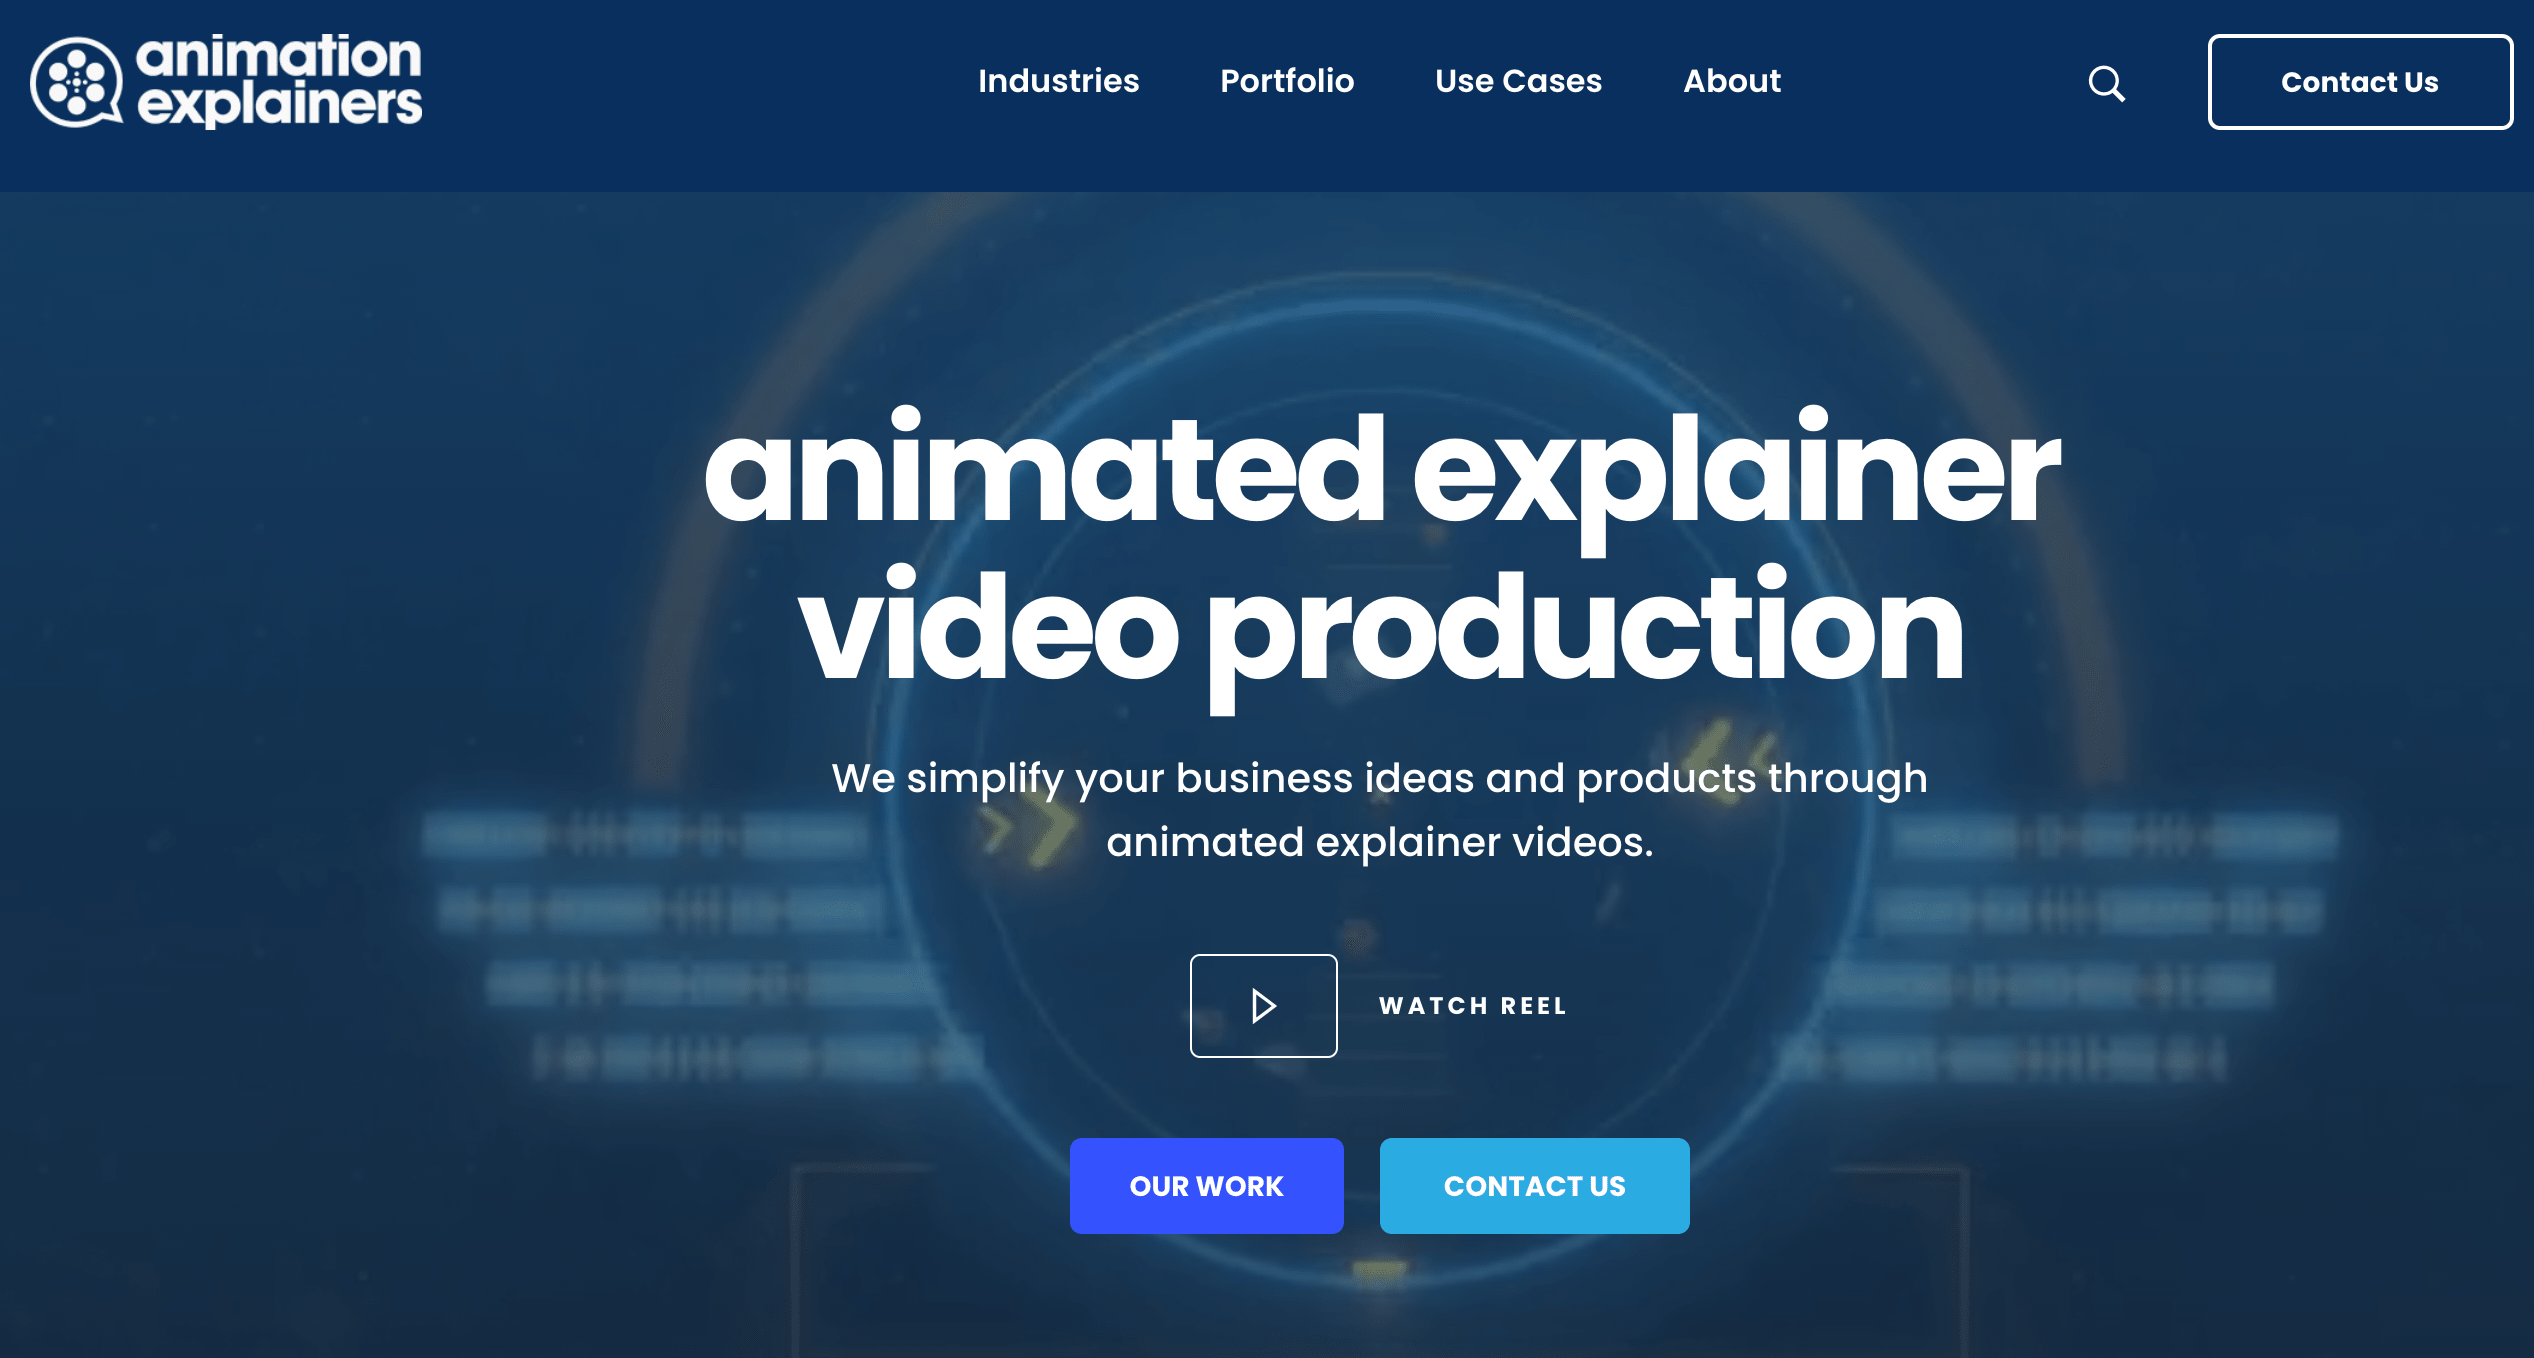 animation explainers